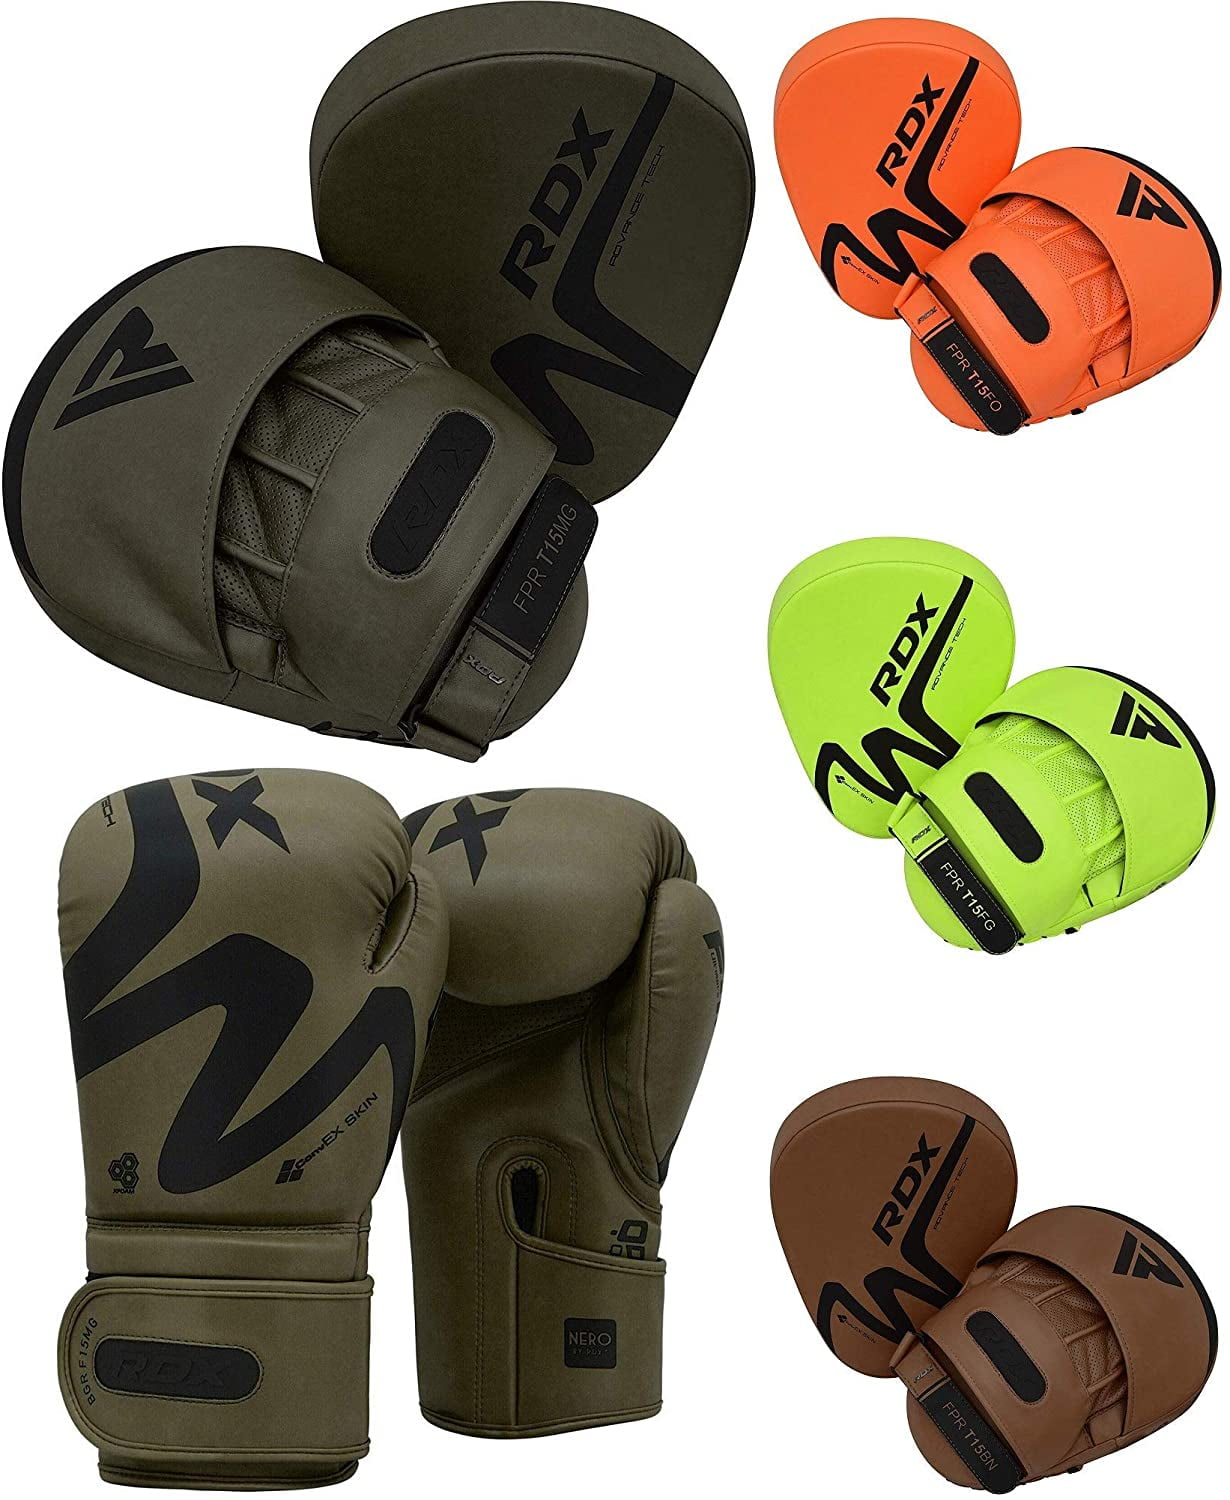 Athletics Gear Focus Pads Hook & Jab Mitts Kick Boxing MMA Strike Punch Bag Kick Curved